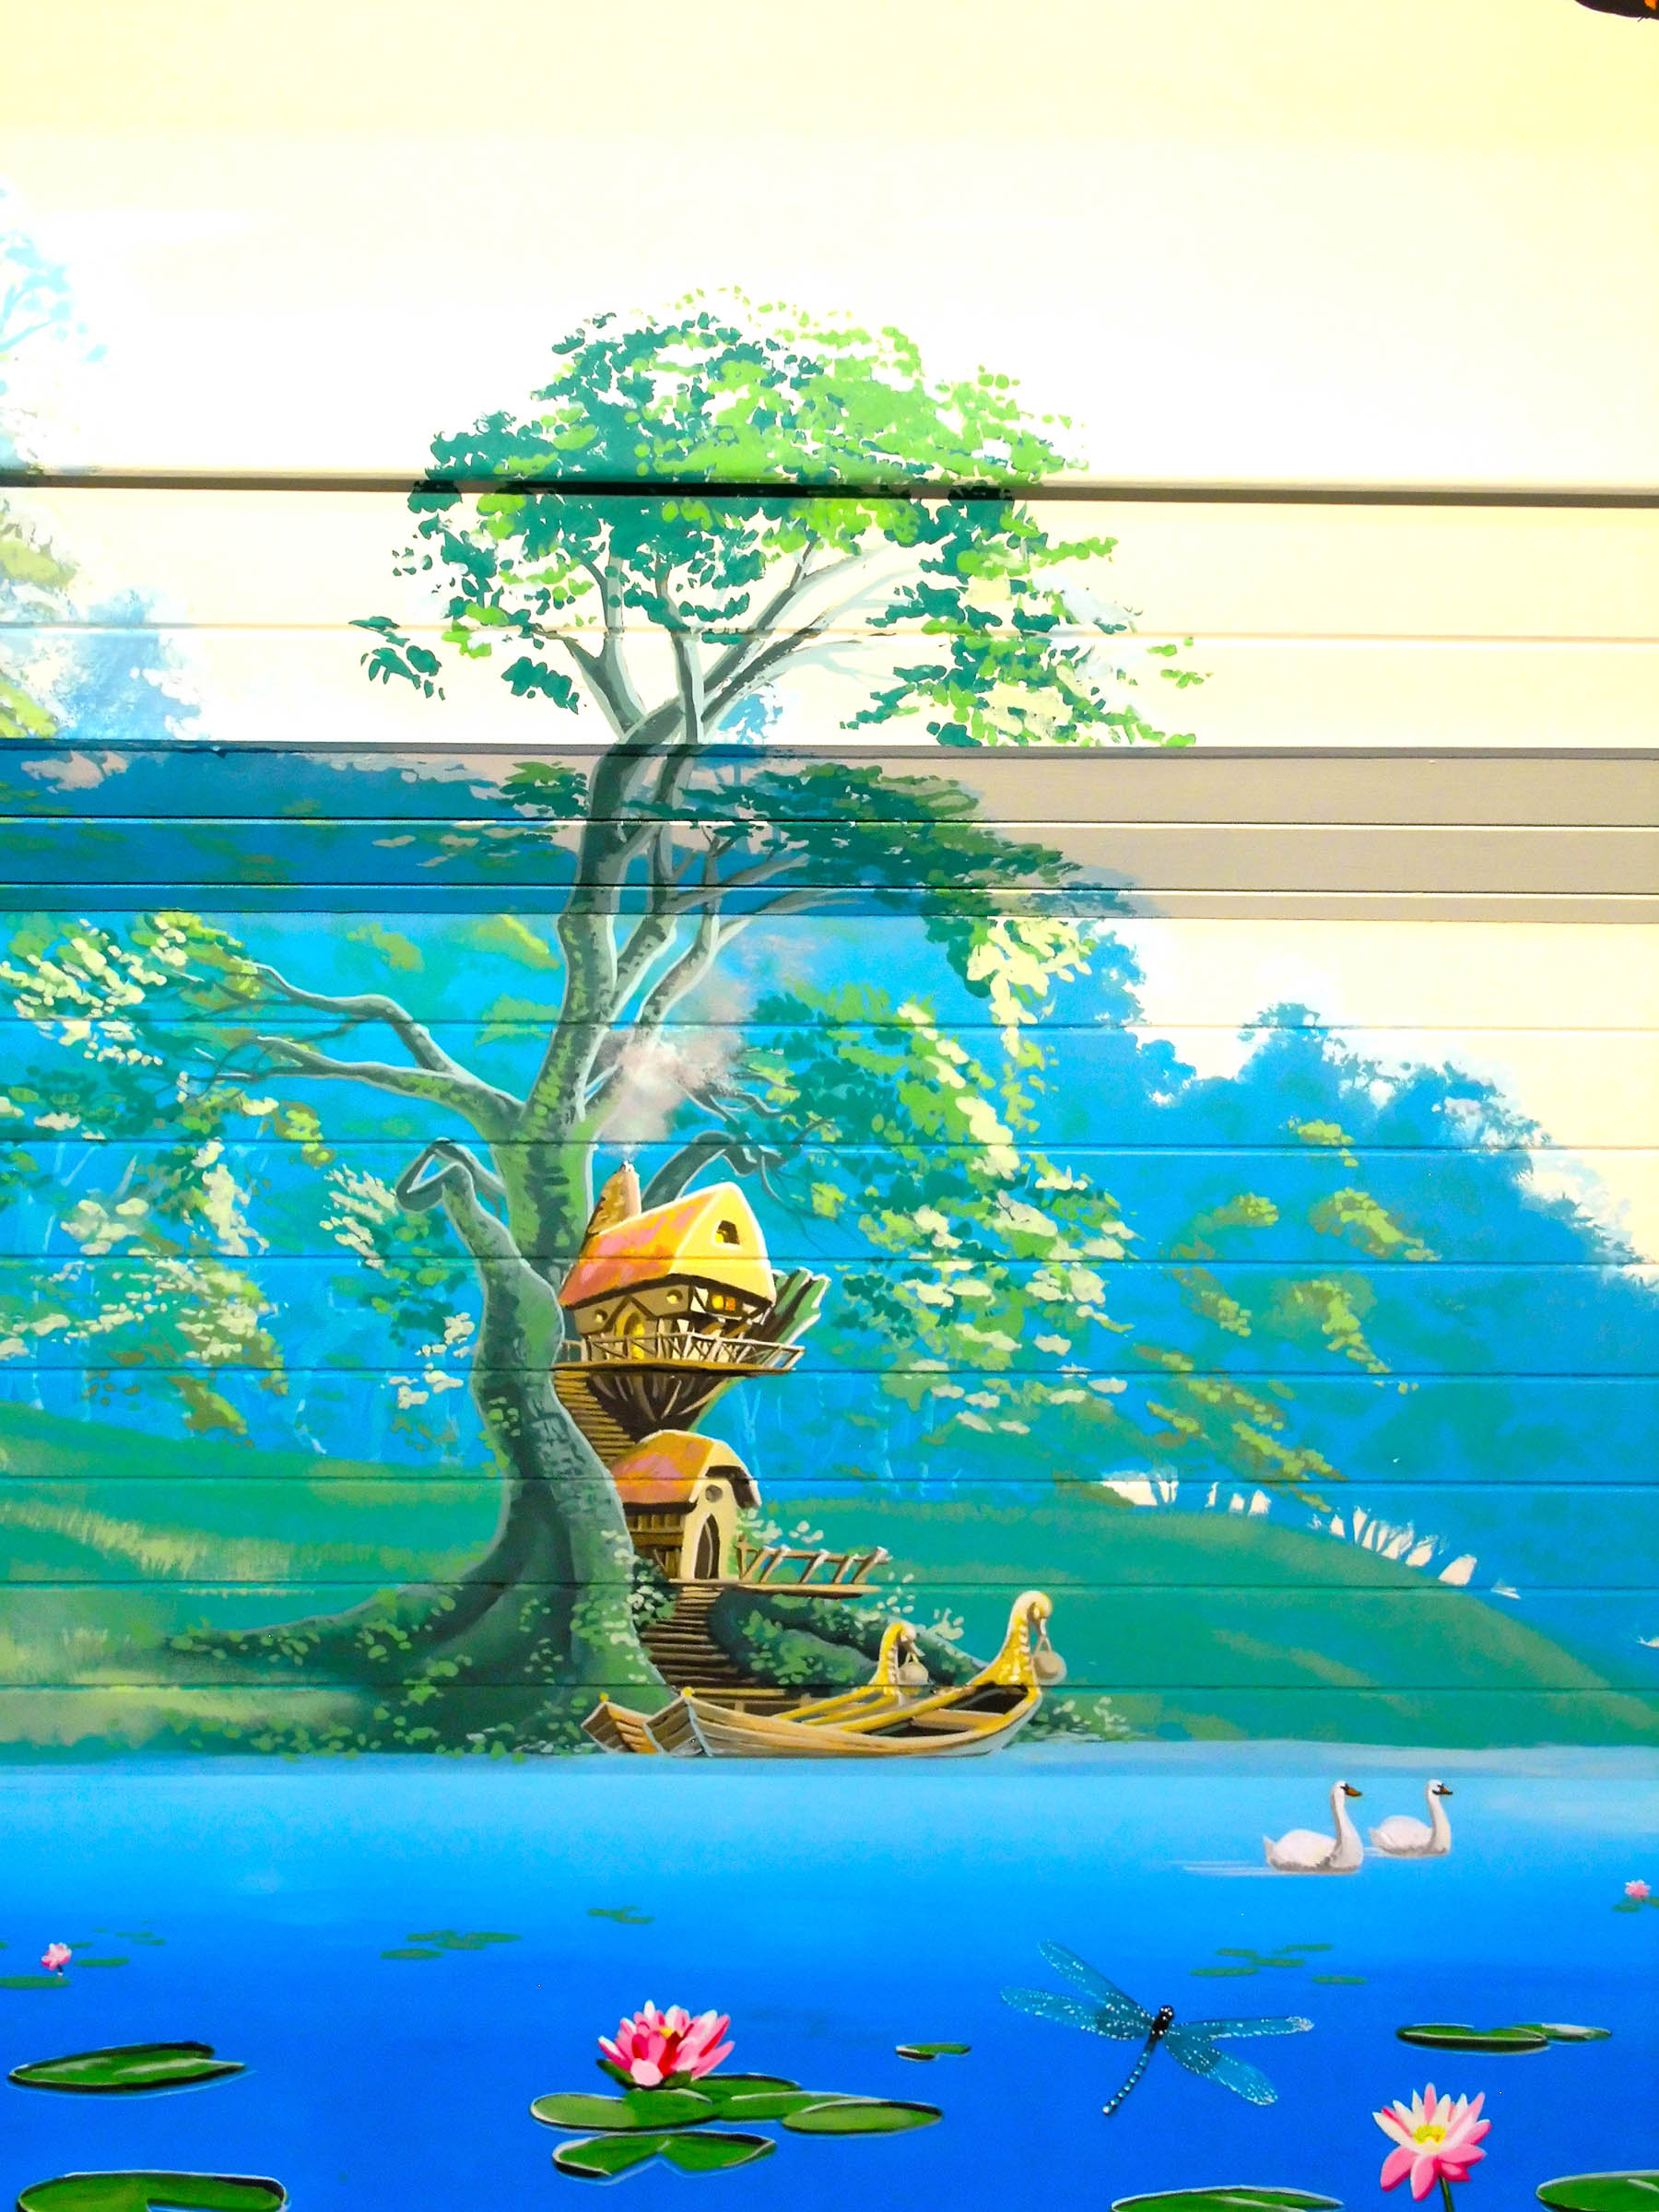 Children's playroom dream mural